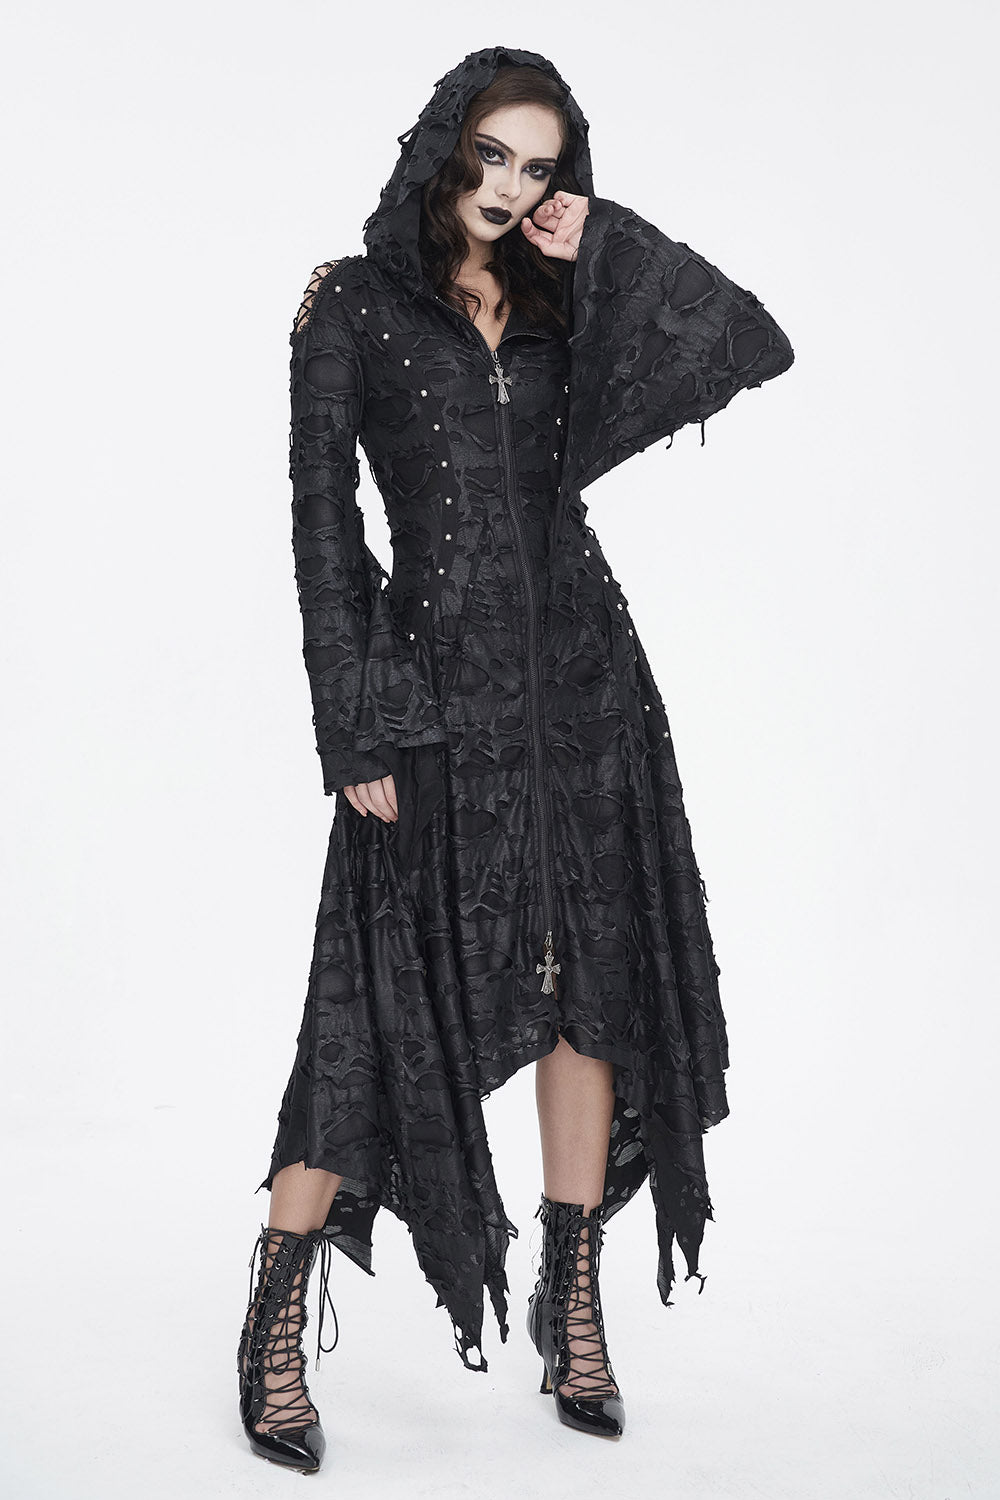 womens gothic clothing